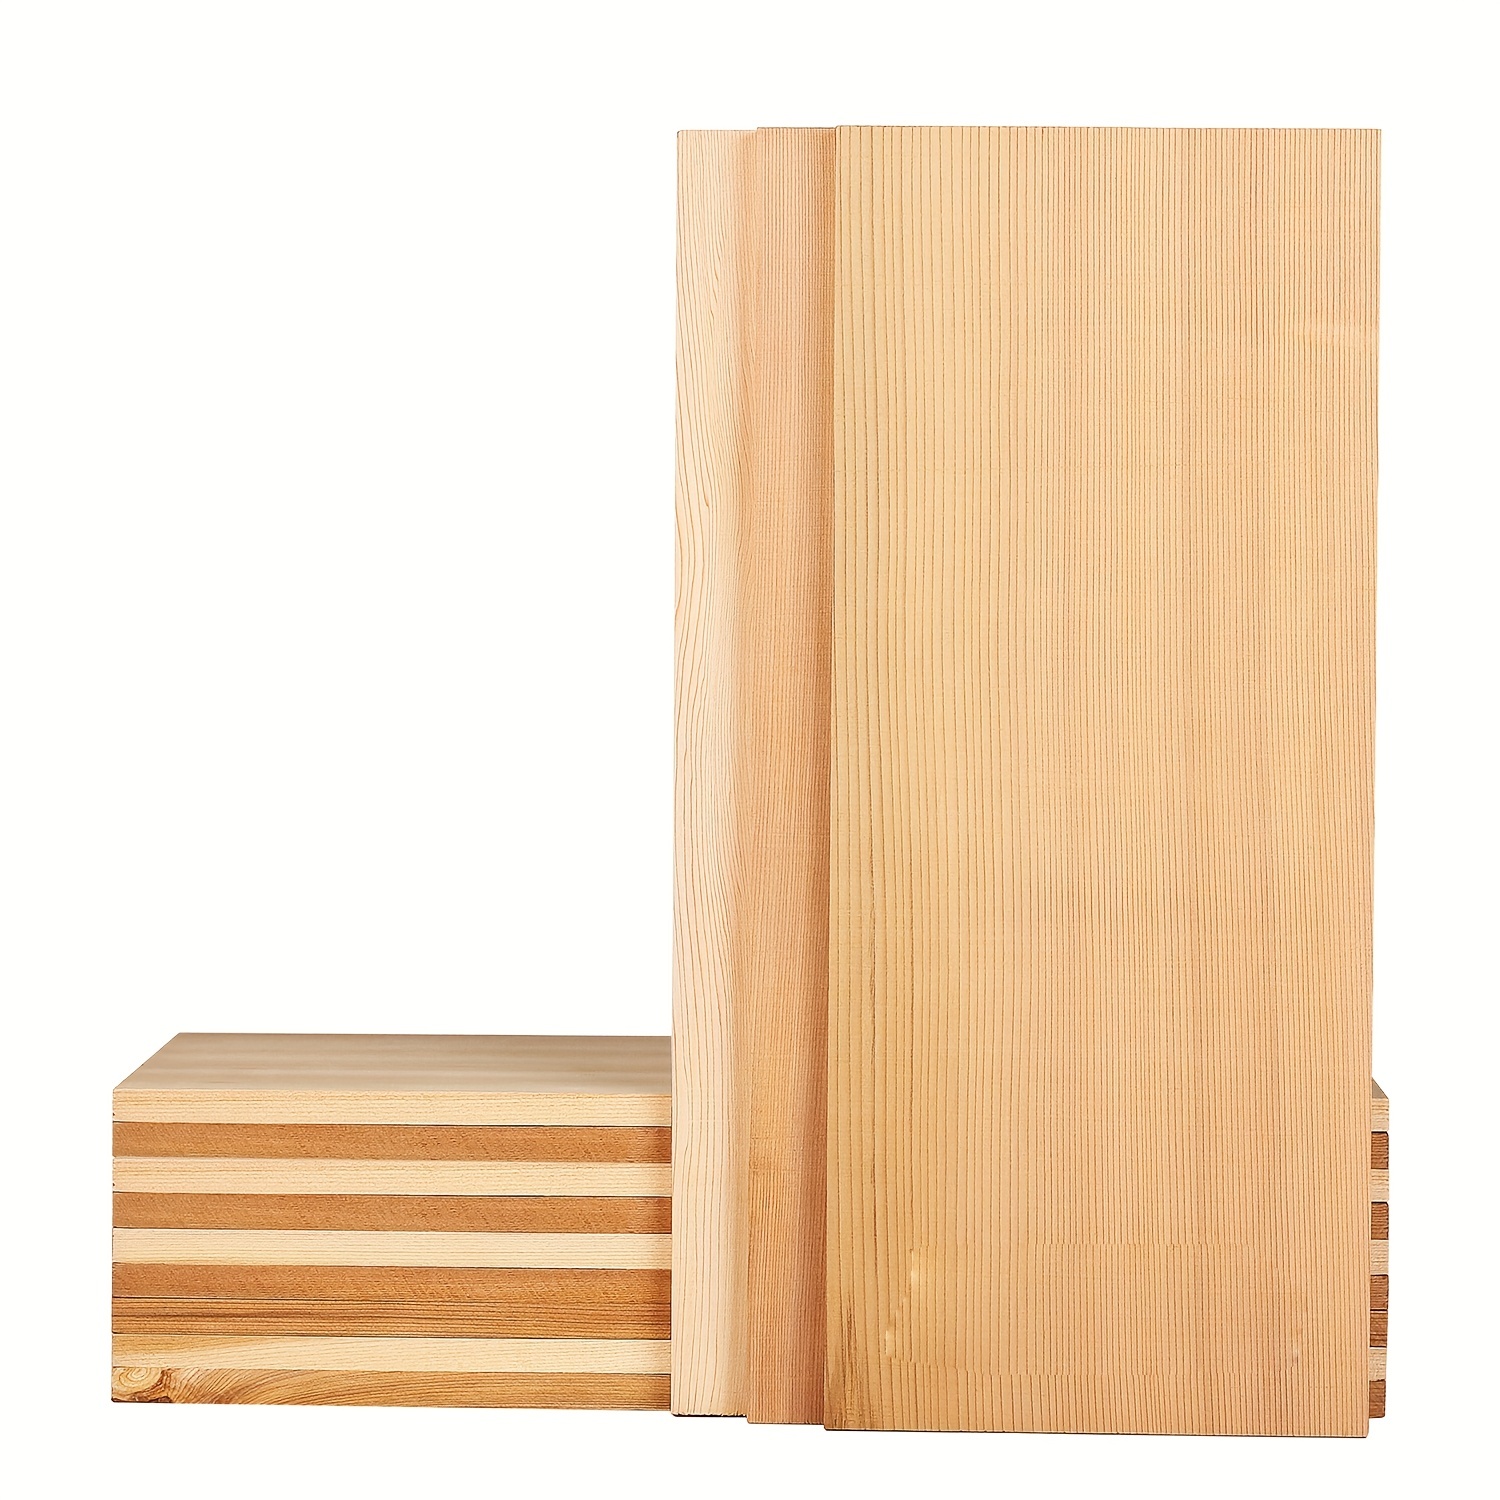 150 unidades de palos de tilo de 1/8 x 12 pulgadas, pequeñas tiras de  madera dura sin terminar de madera de balsa para manualidades y proyectos  de